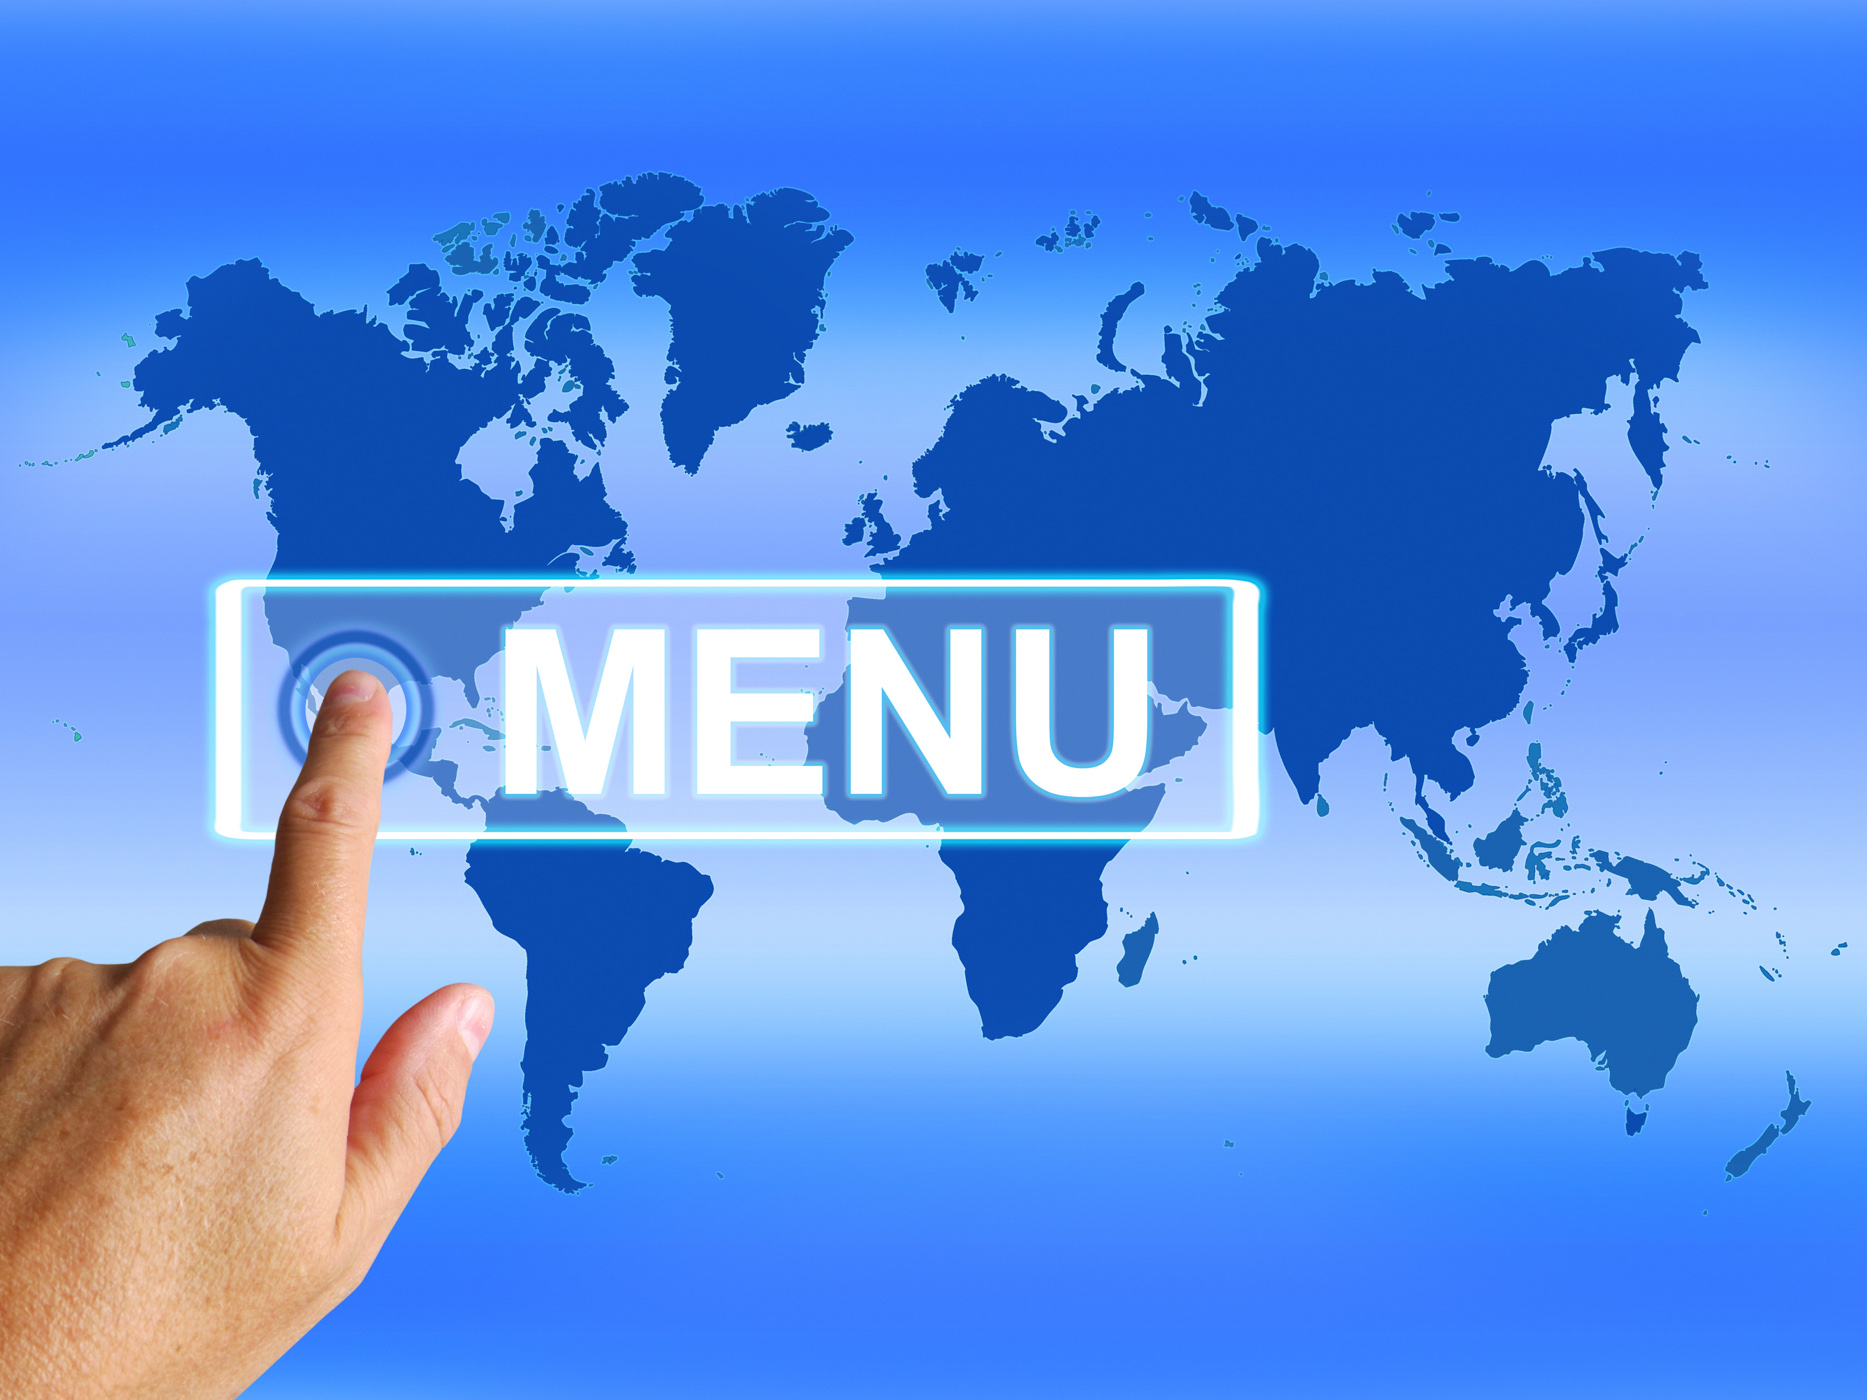 Menu map refers to international choosing and options photo